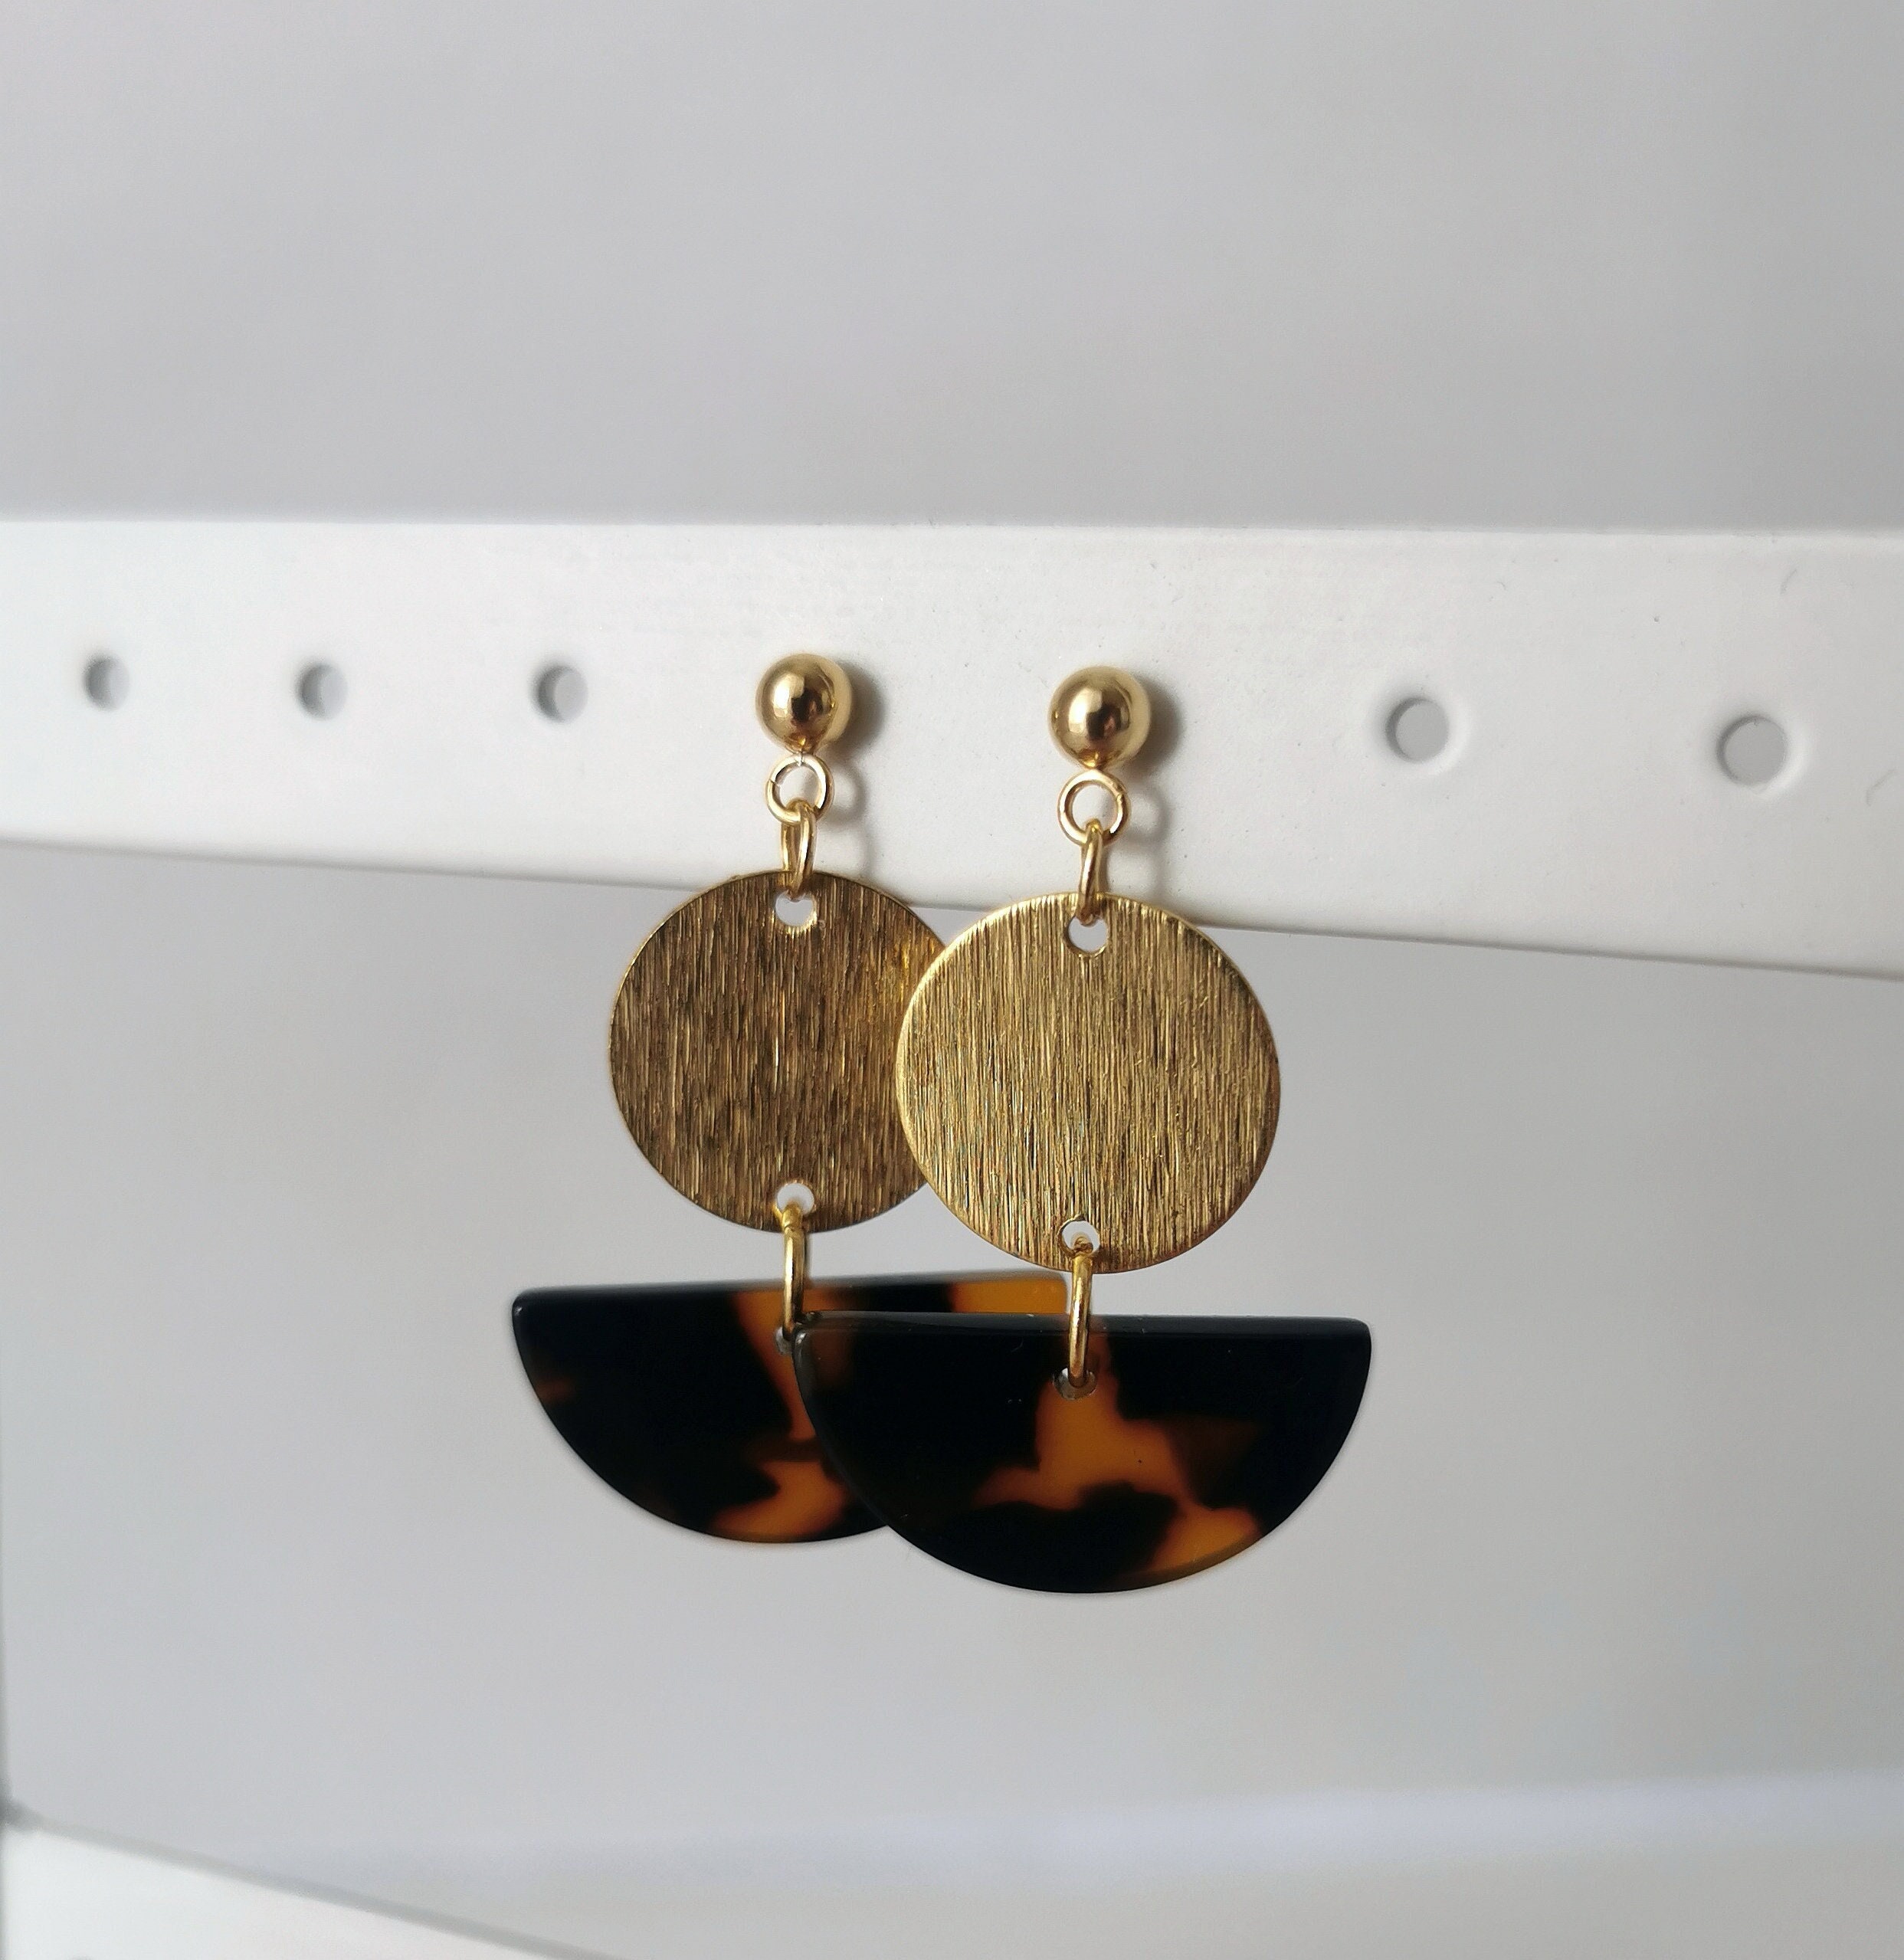 Minimalist Browntortoiseshell Half Moon Earrings With Textured Circular Charm & 18K Gold Plated Ball Stud Post